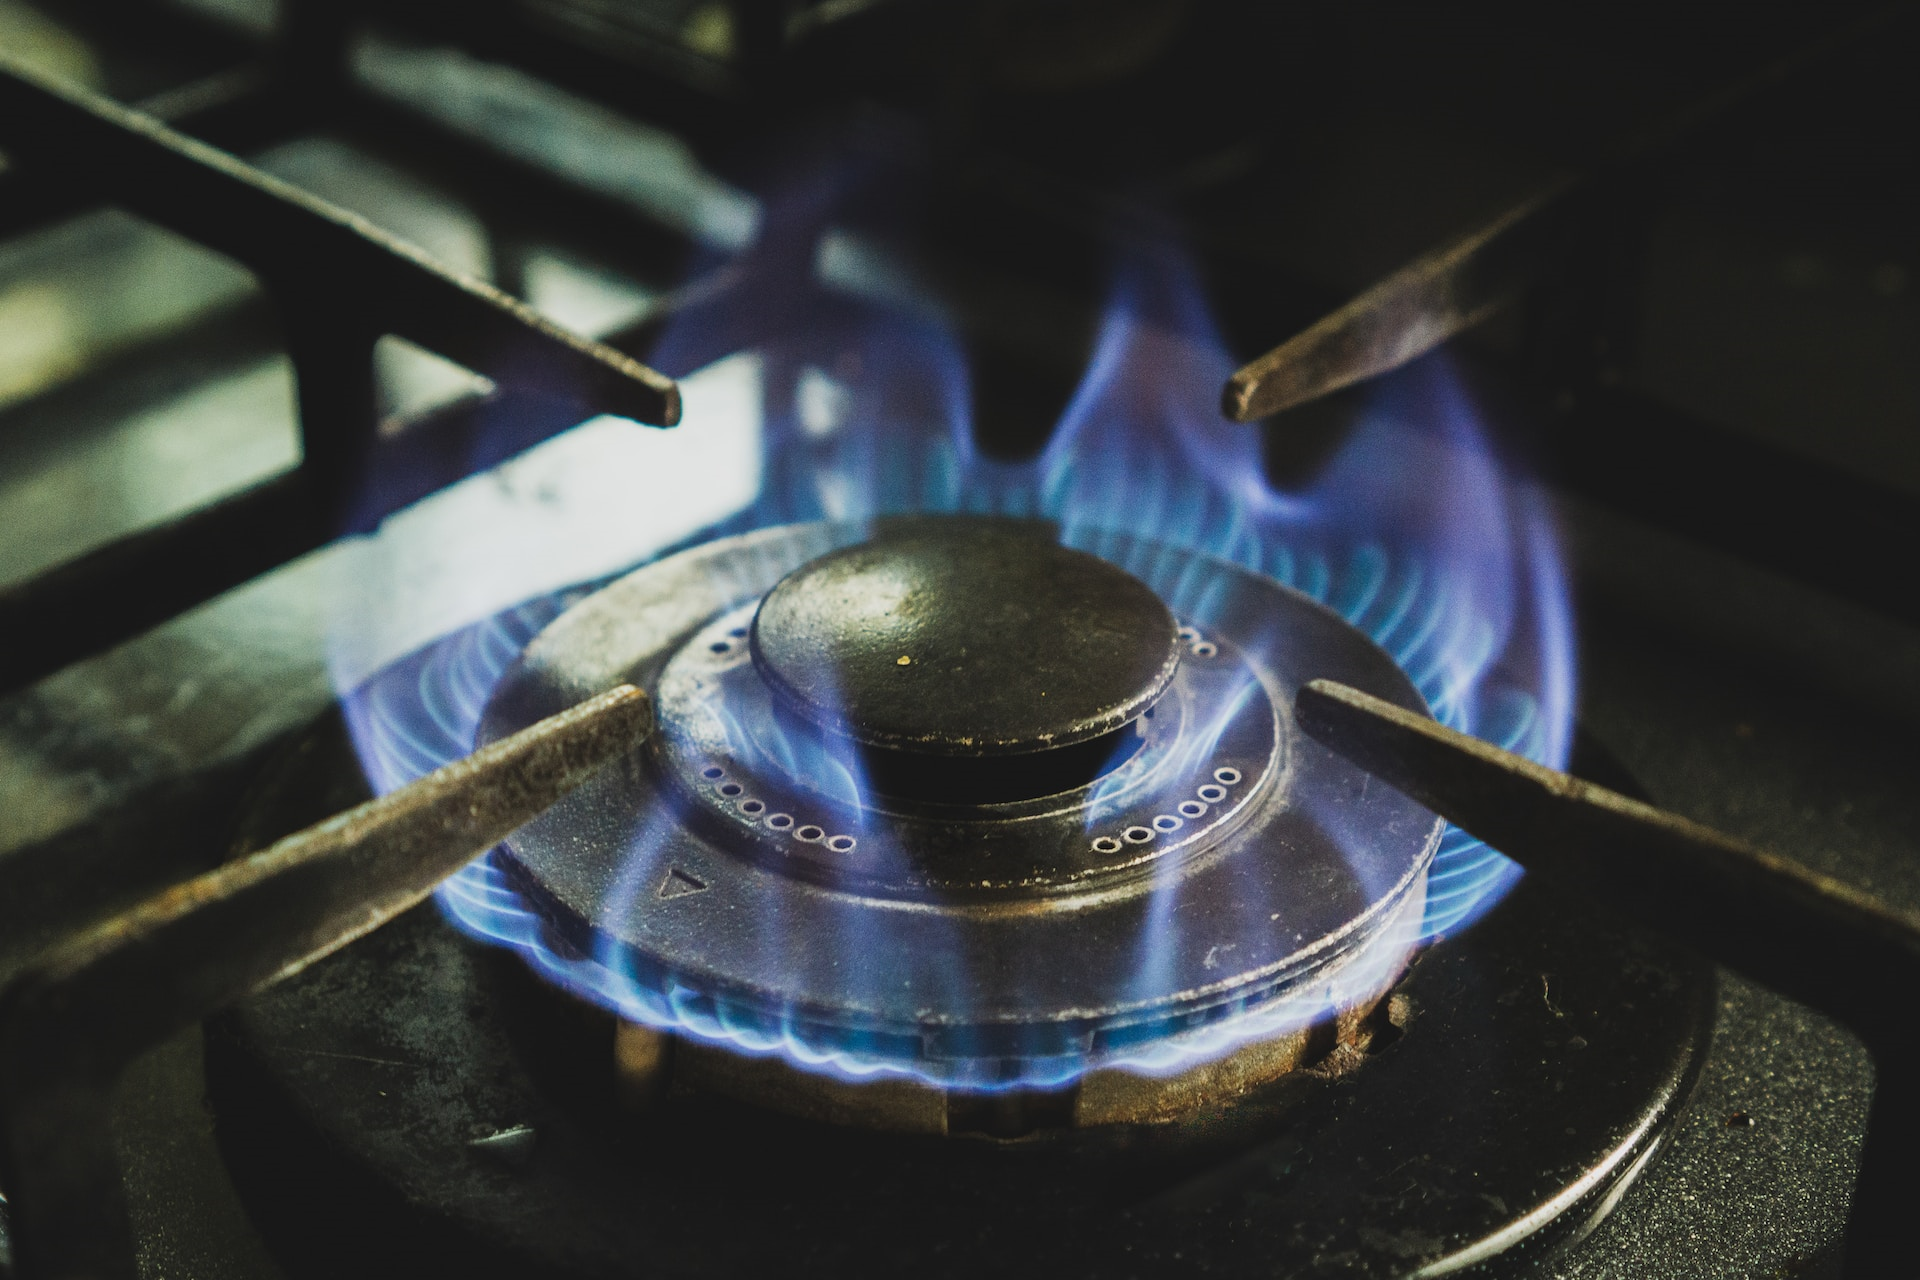 A lit gas stove